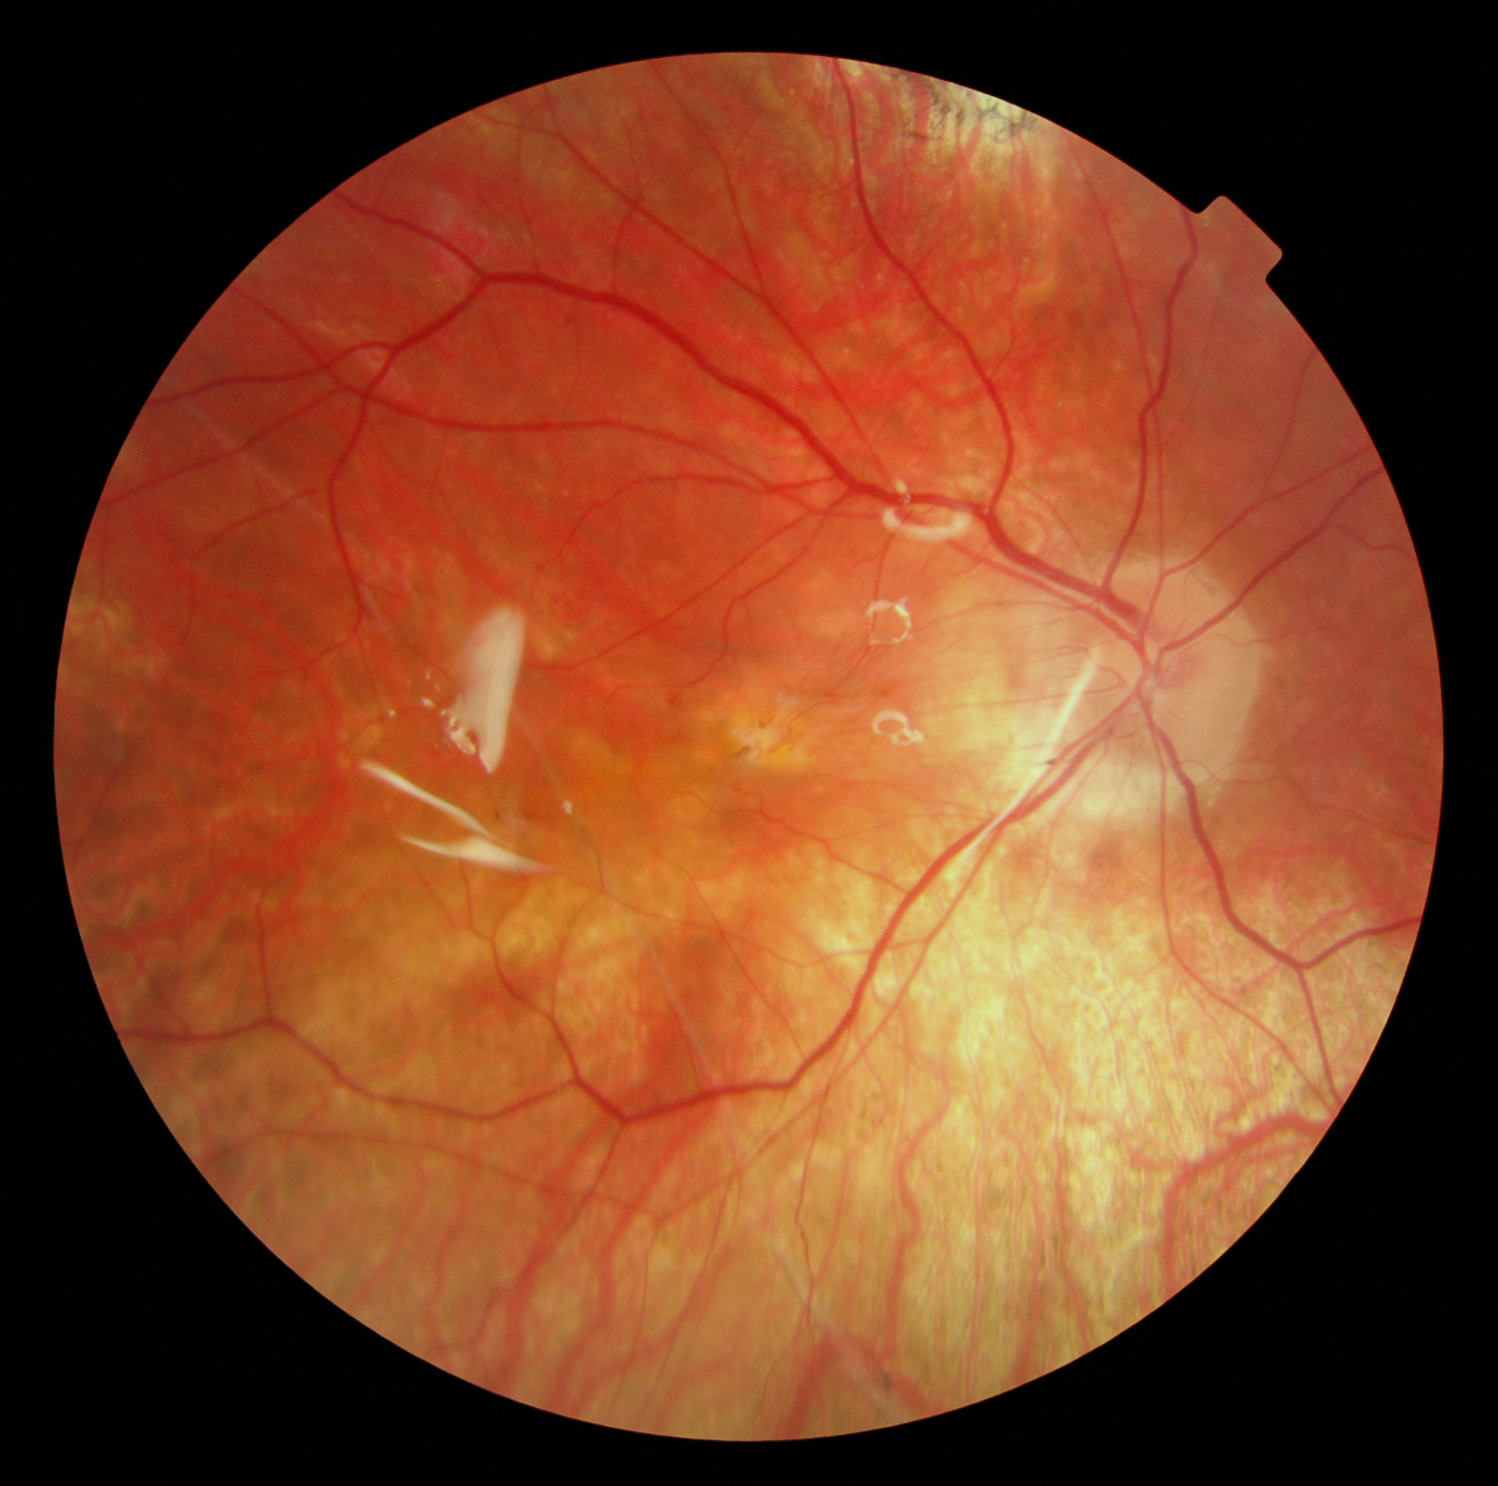 Retinal Detachment with Silicon Oil Vitrectomy